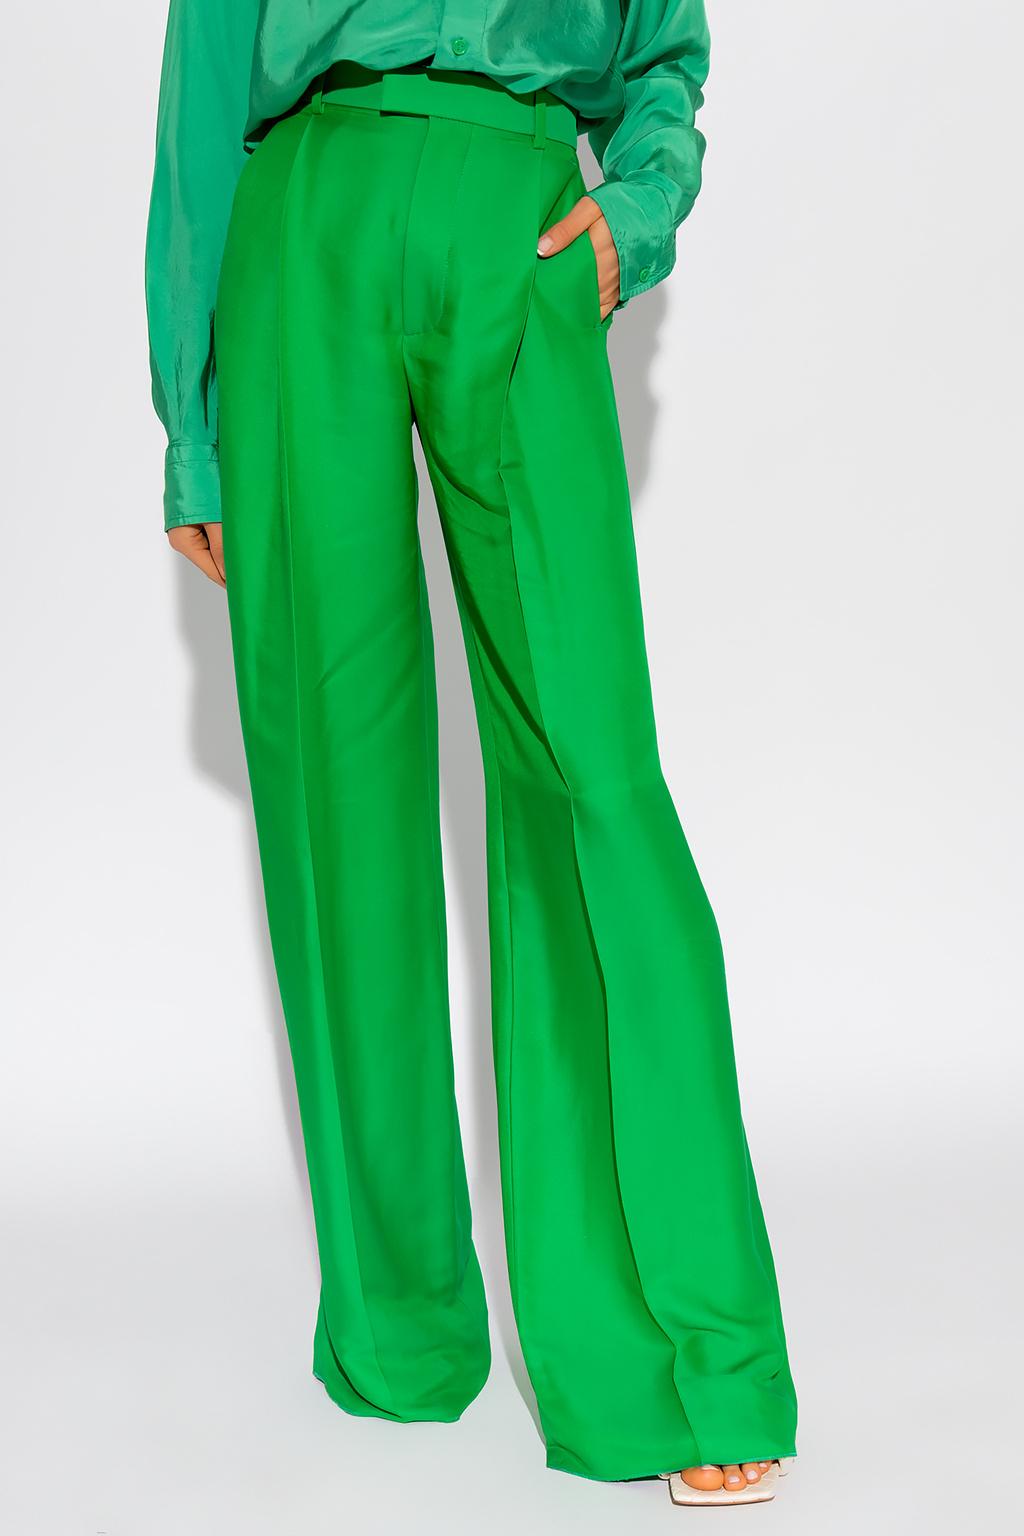 Bottega Veneta Wide-legged Trousers in Green | Lyst